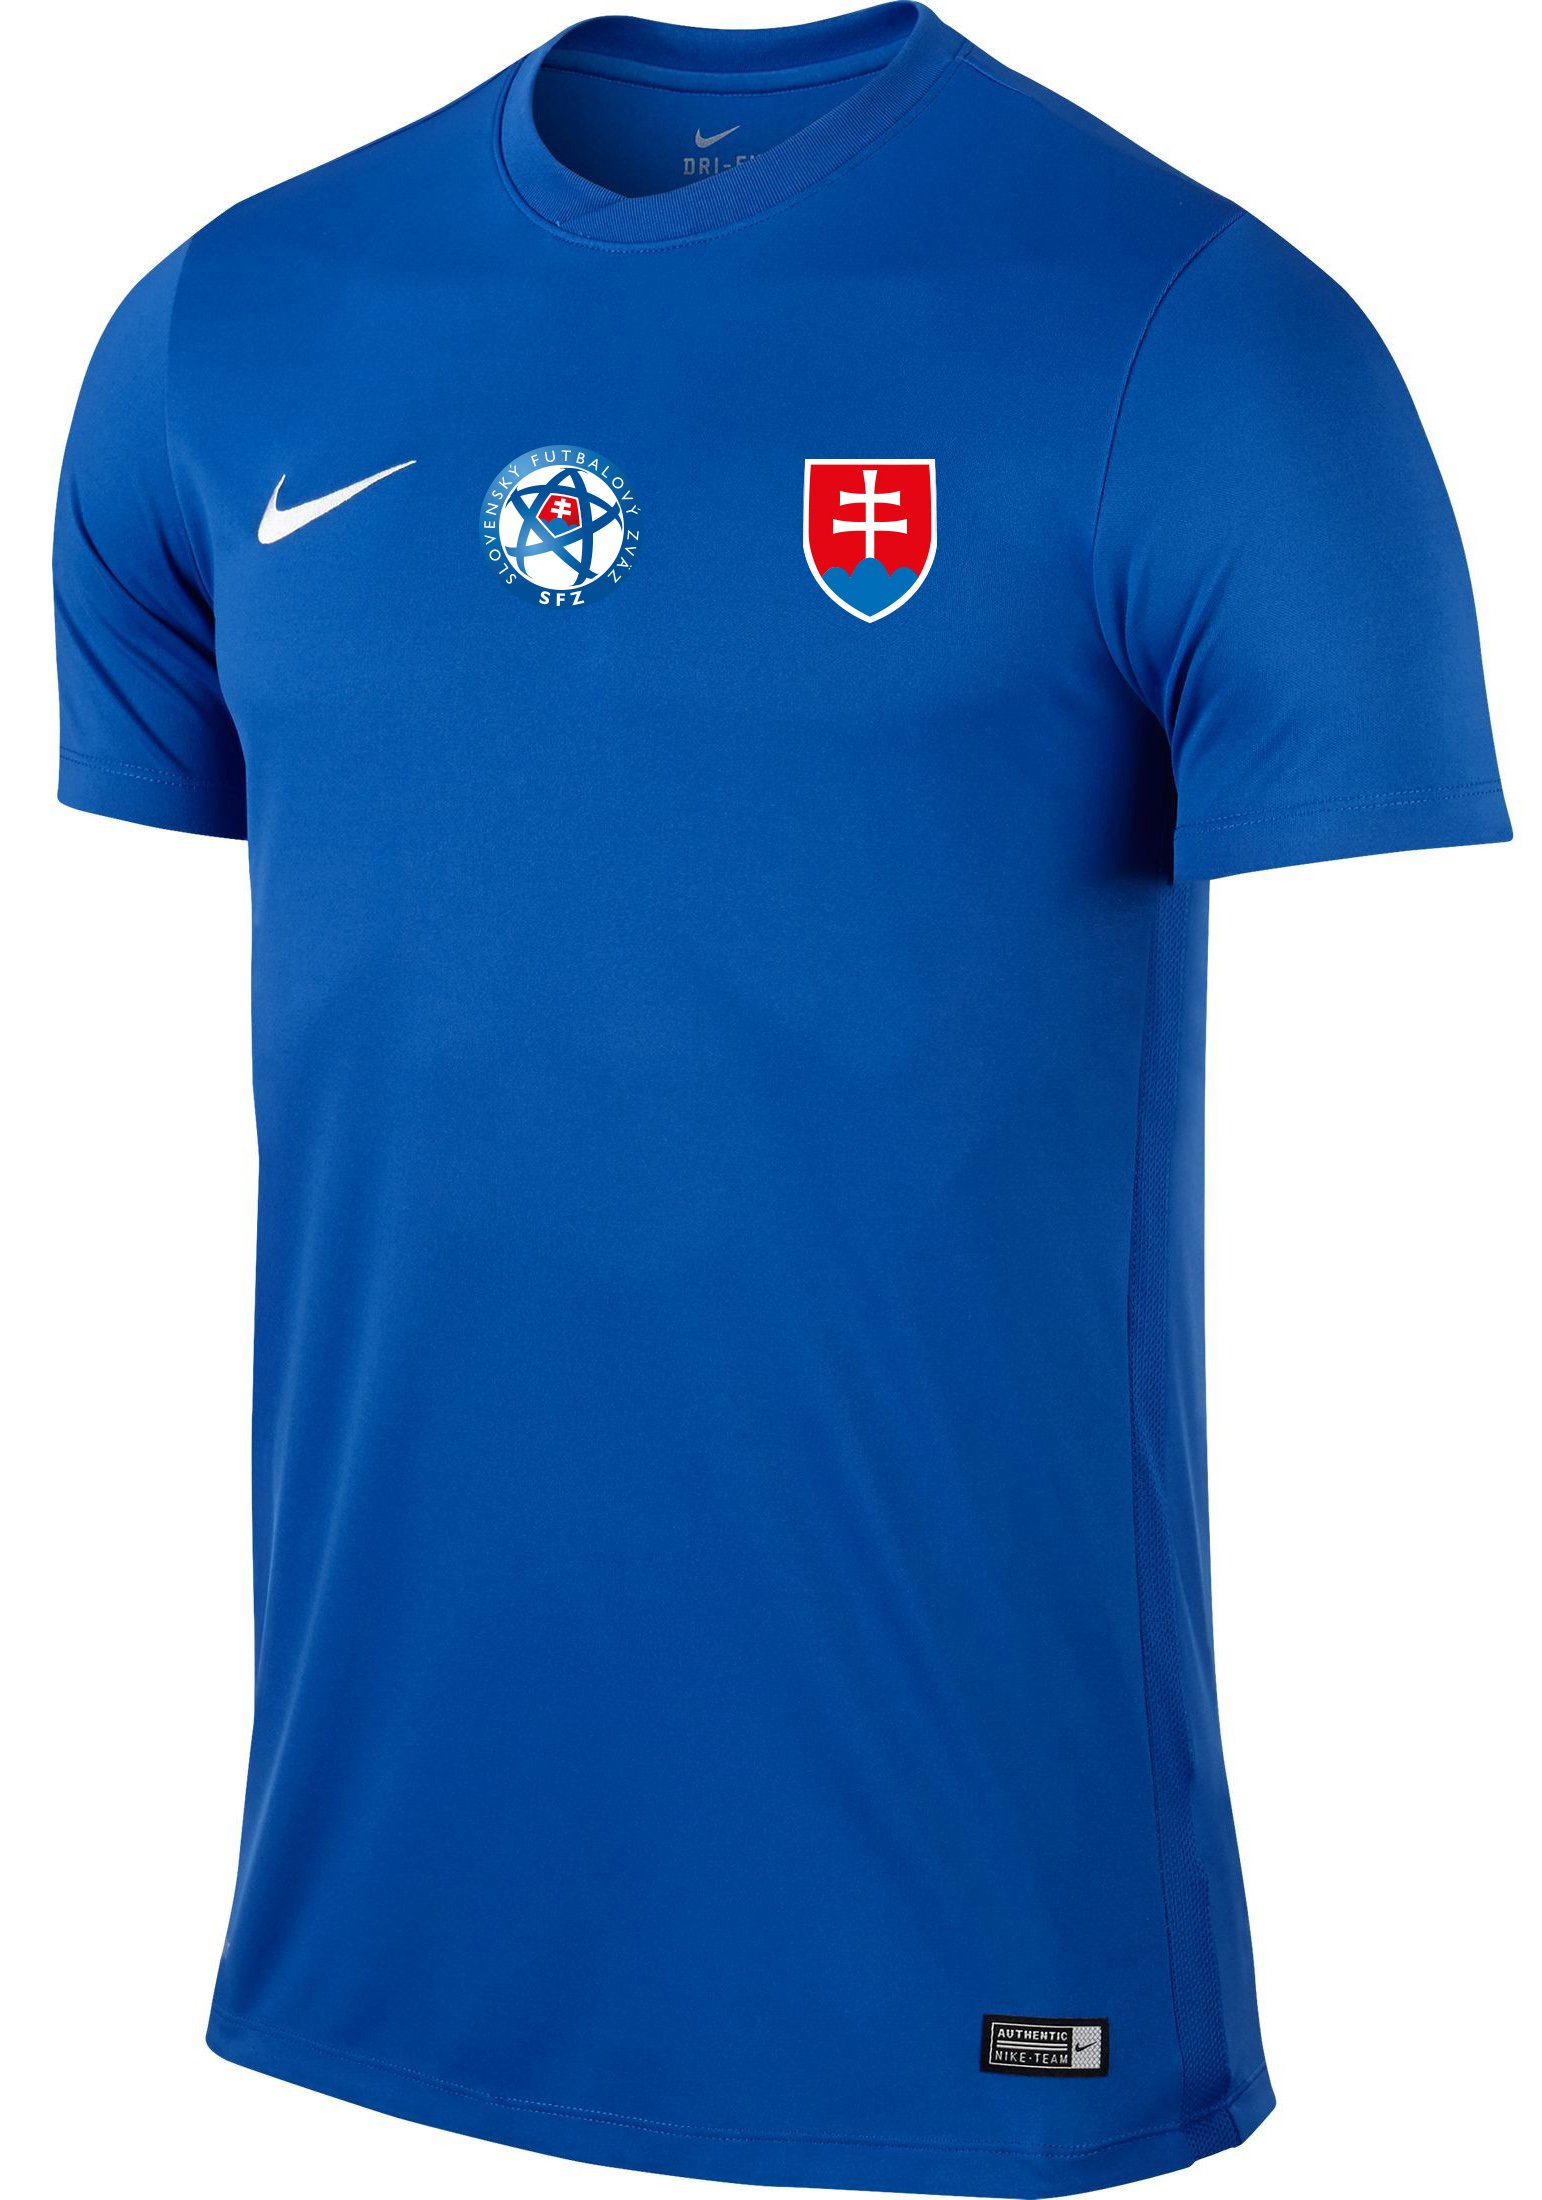 Trikot Nike Slovakia Replica Away Football Jersey 2016/2017